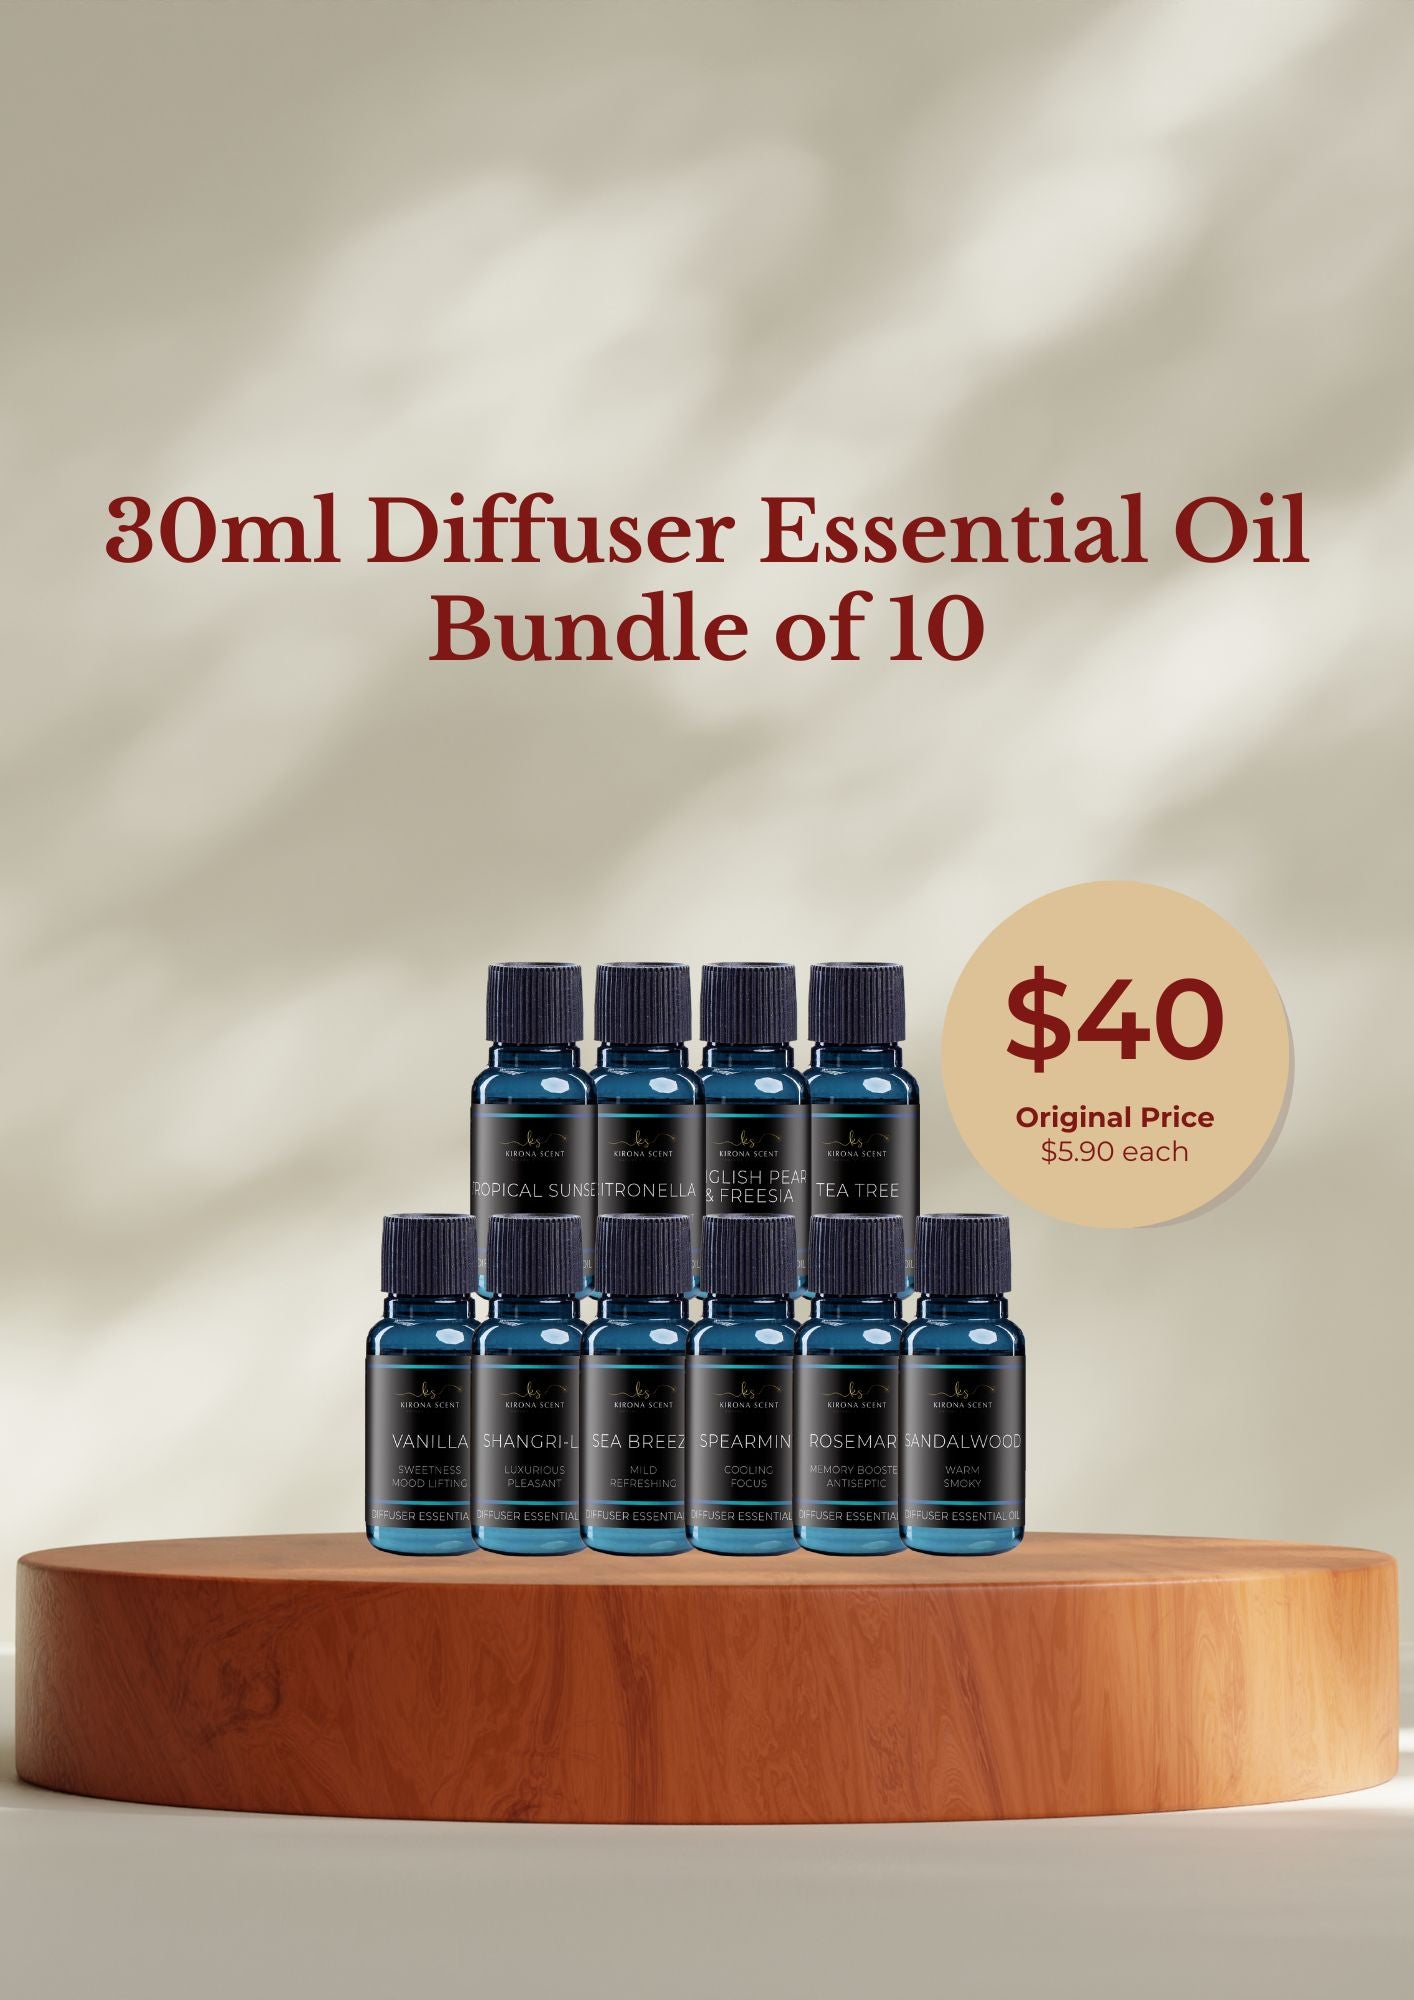 30ml Diffuser Essential Oil (Bundle of 10)